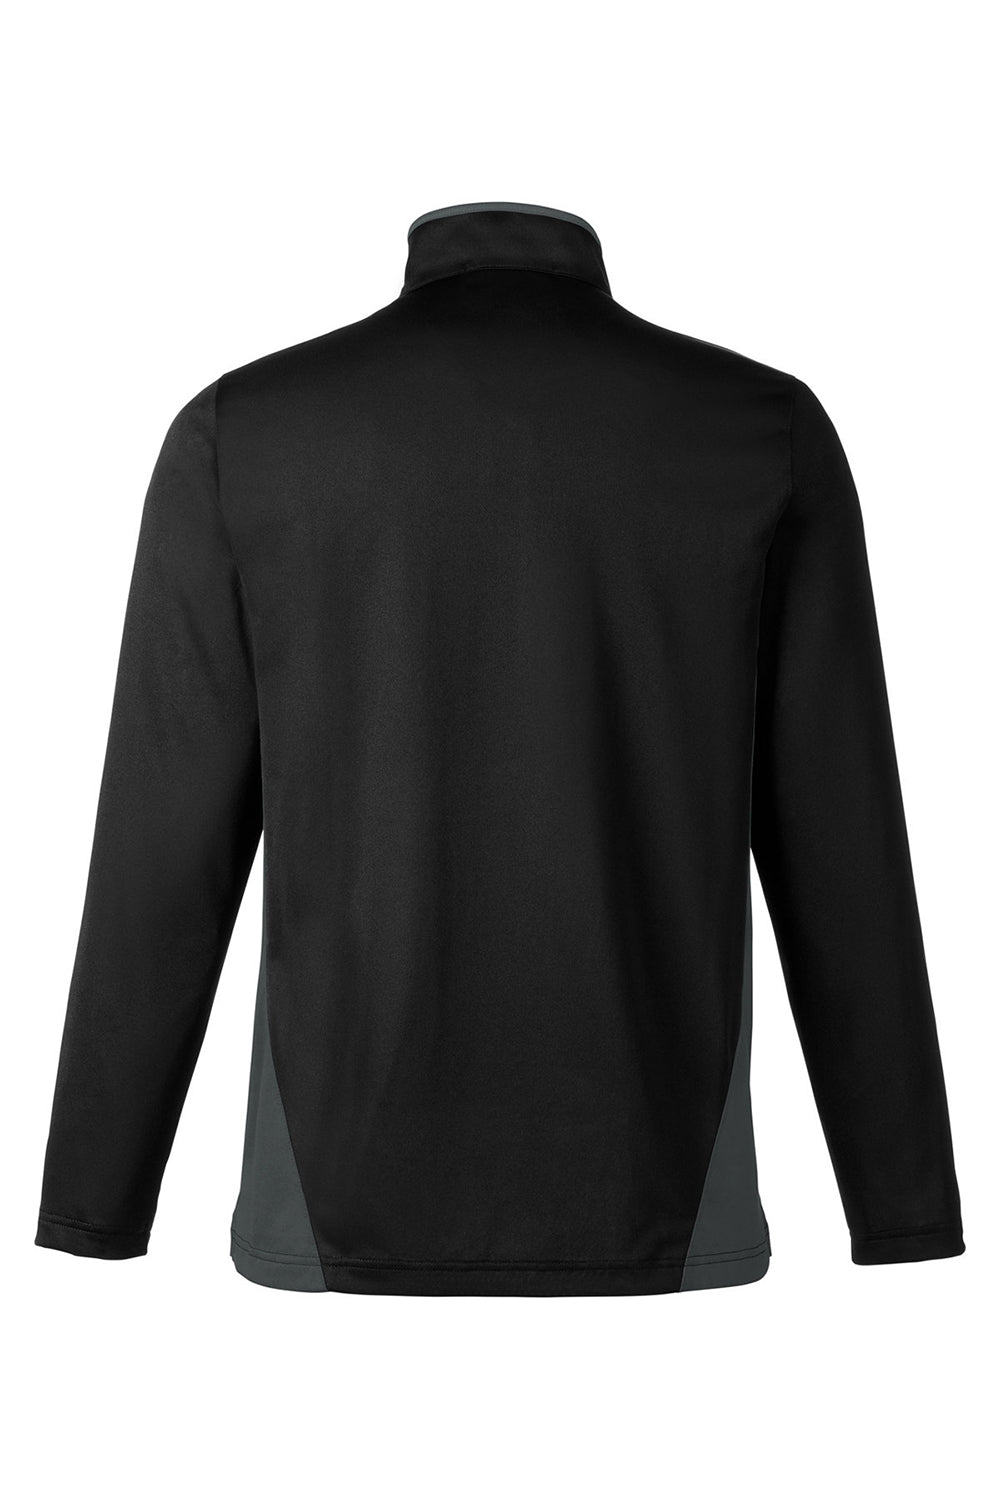 Harriton M786 Mens Flash Performance Moisture Wicking Colorblock 1/4 Zip Sweatshirt Black/Dark Charcoal Grey Flat Back